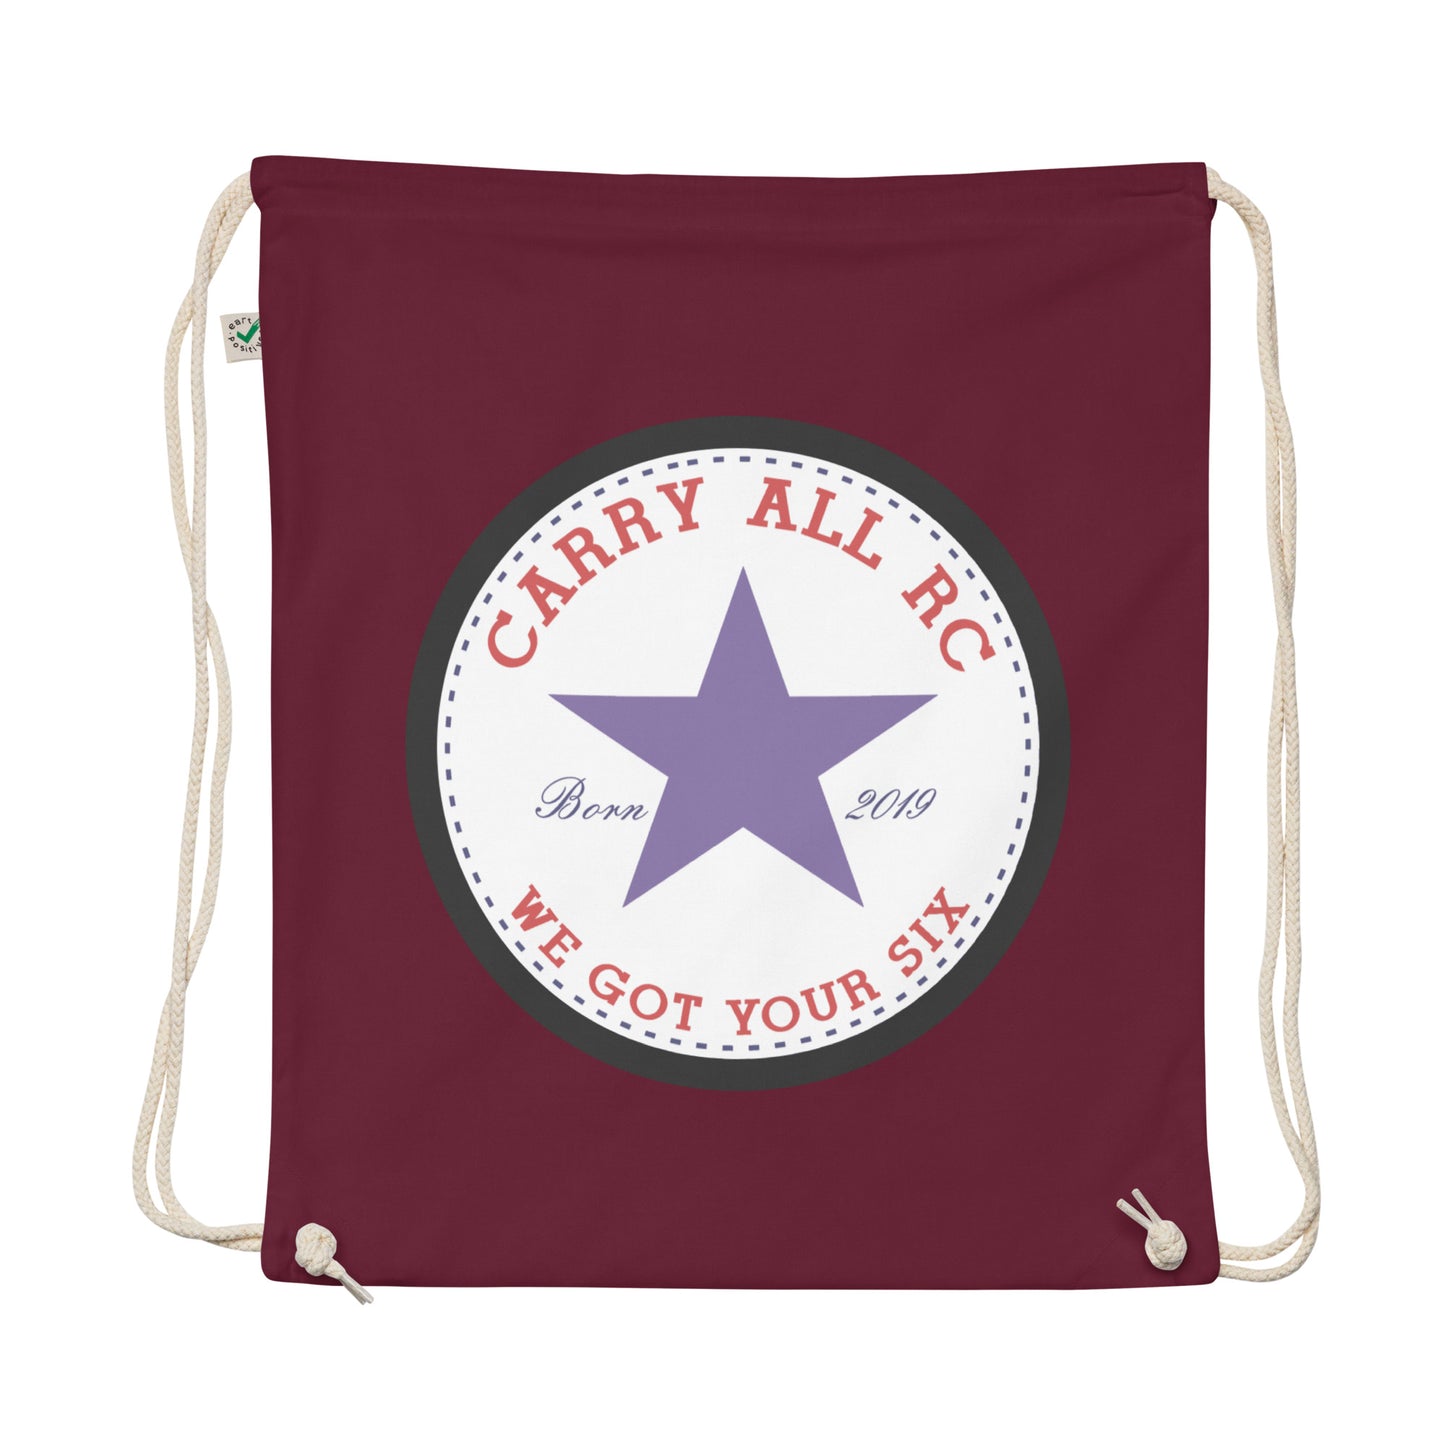 CARC All Star cotton drawstring bag